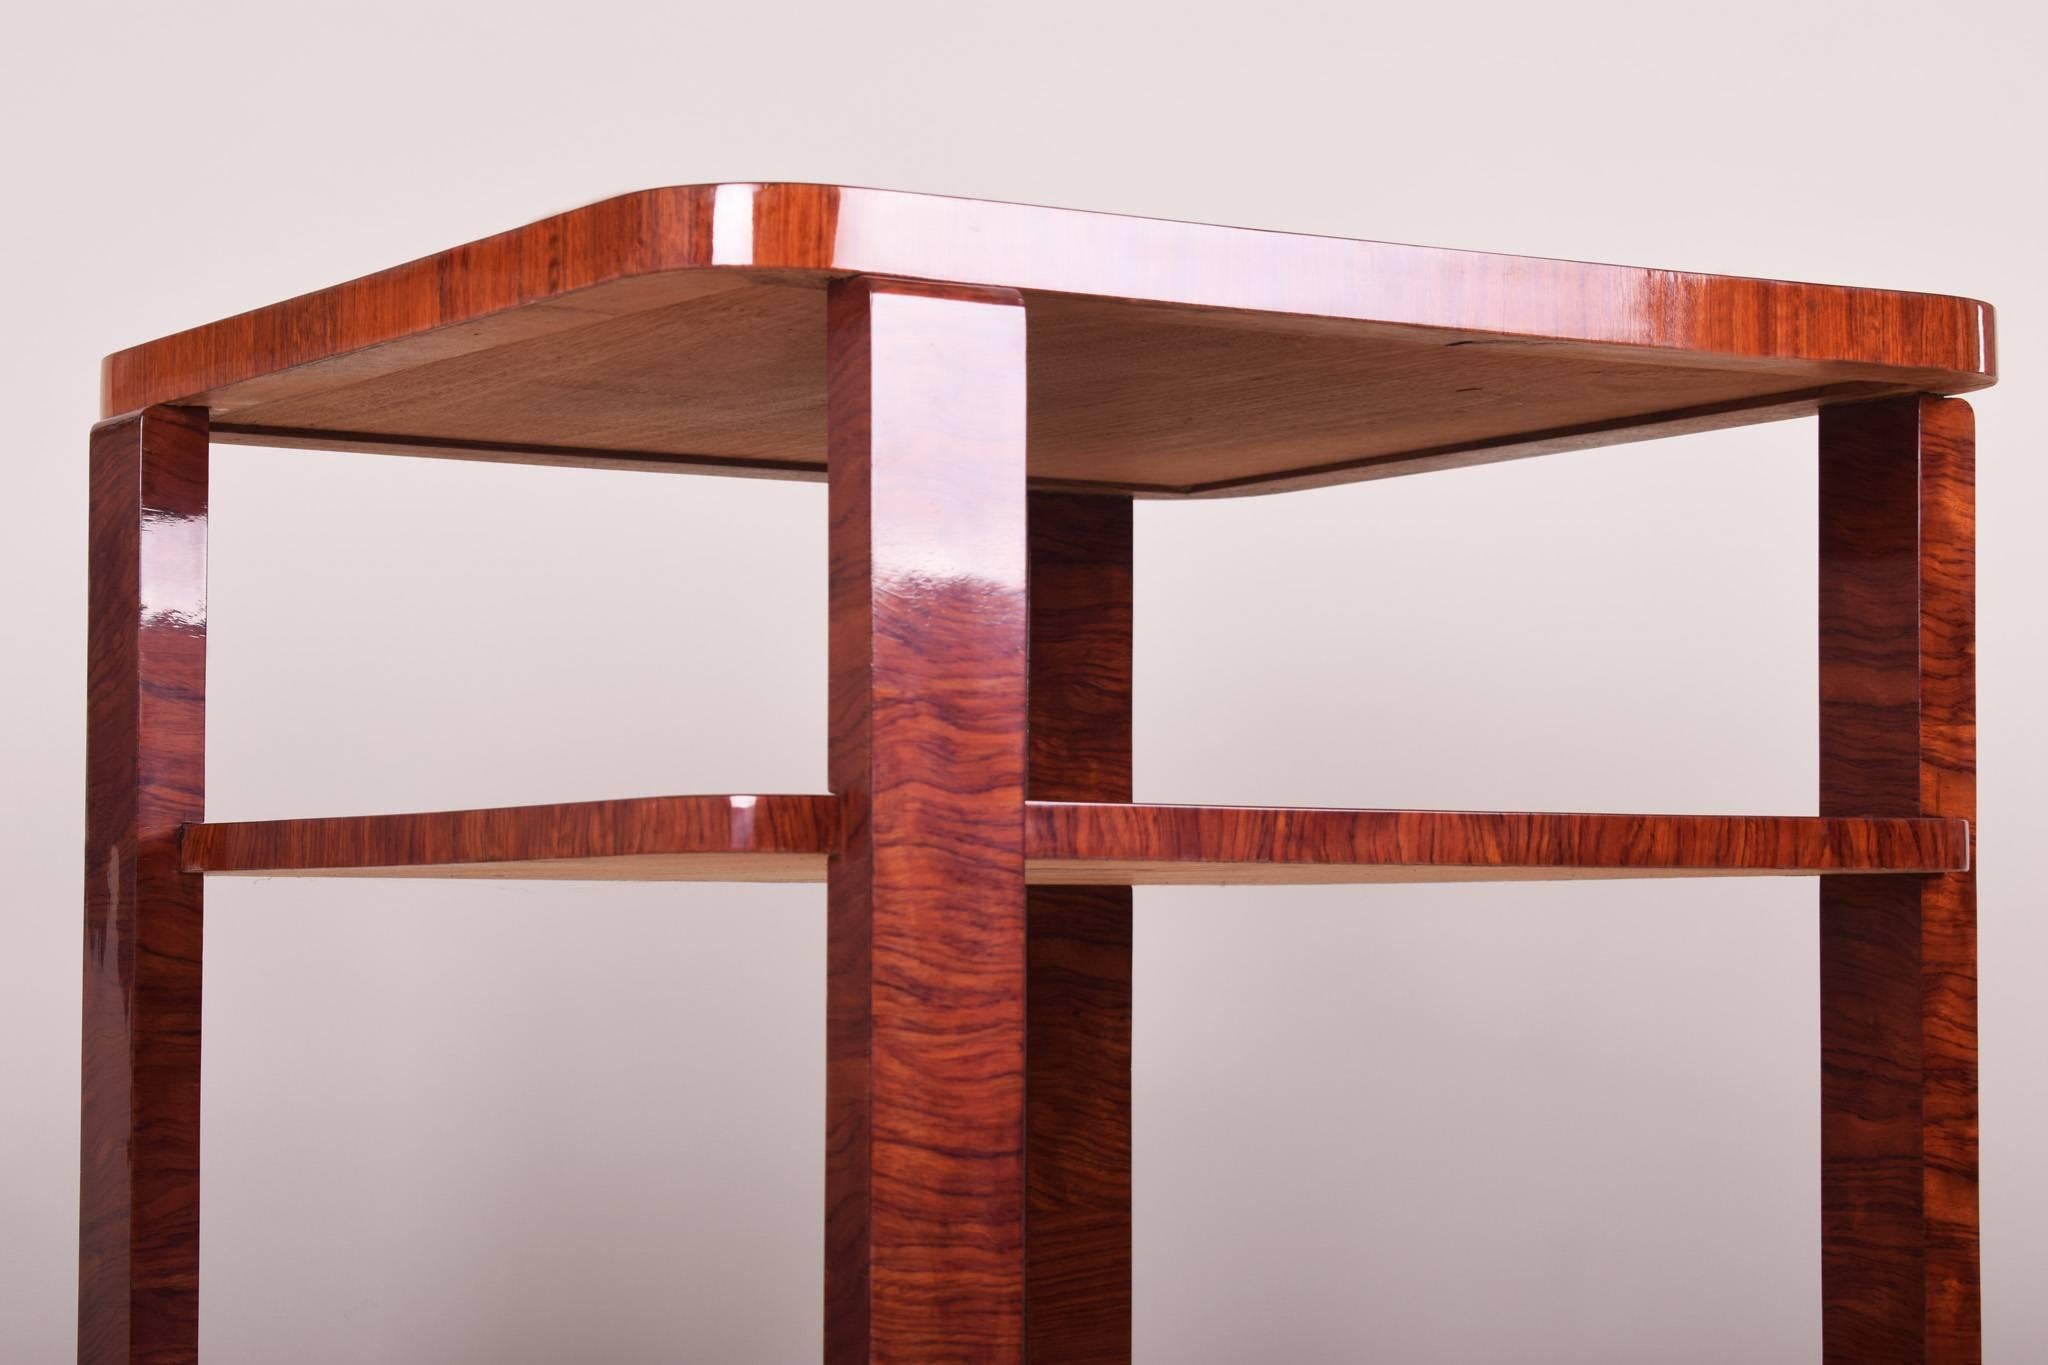 Lacquer Small Square Art Deco Palisander Table, Period 1920-1929, Czechoslovakia